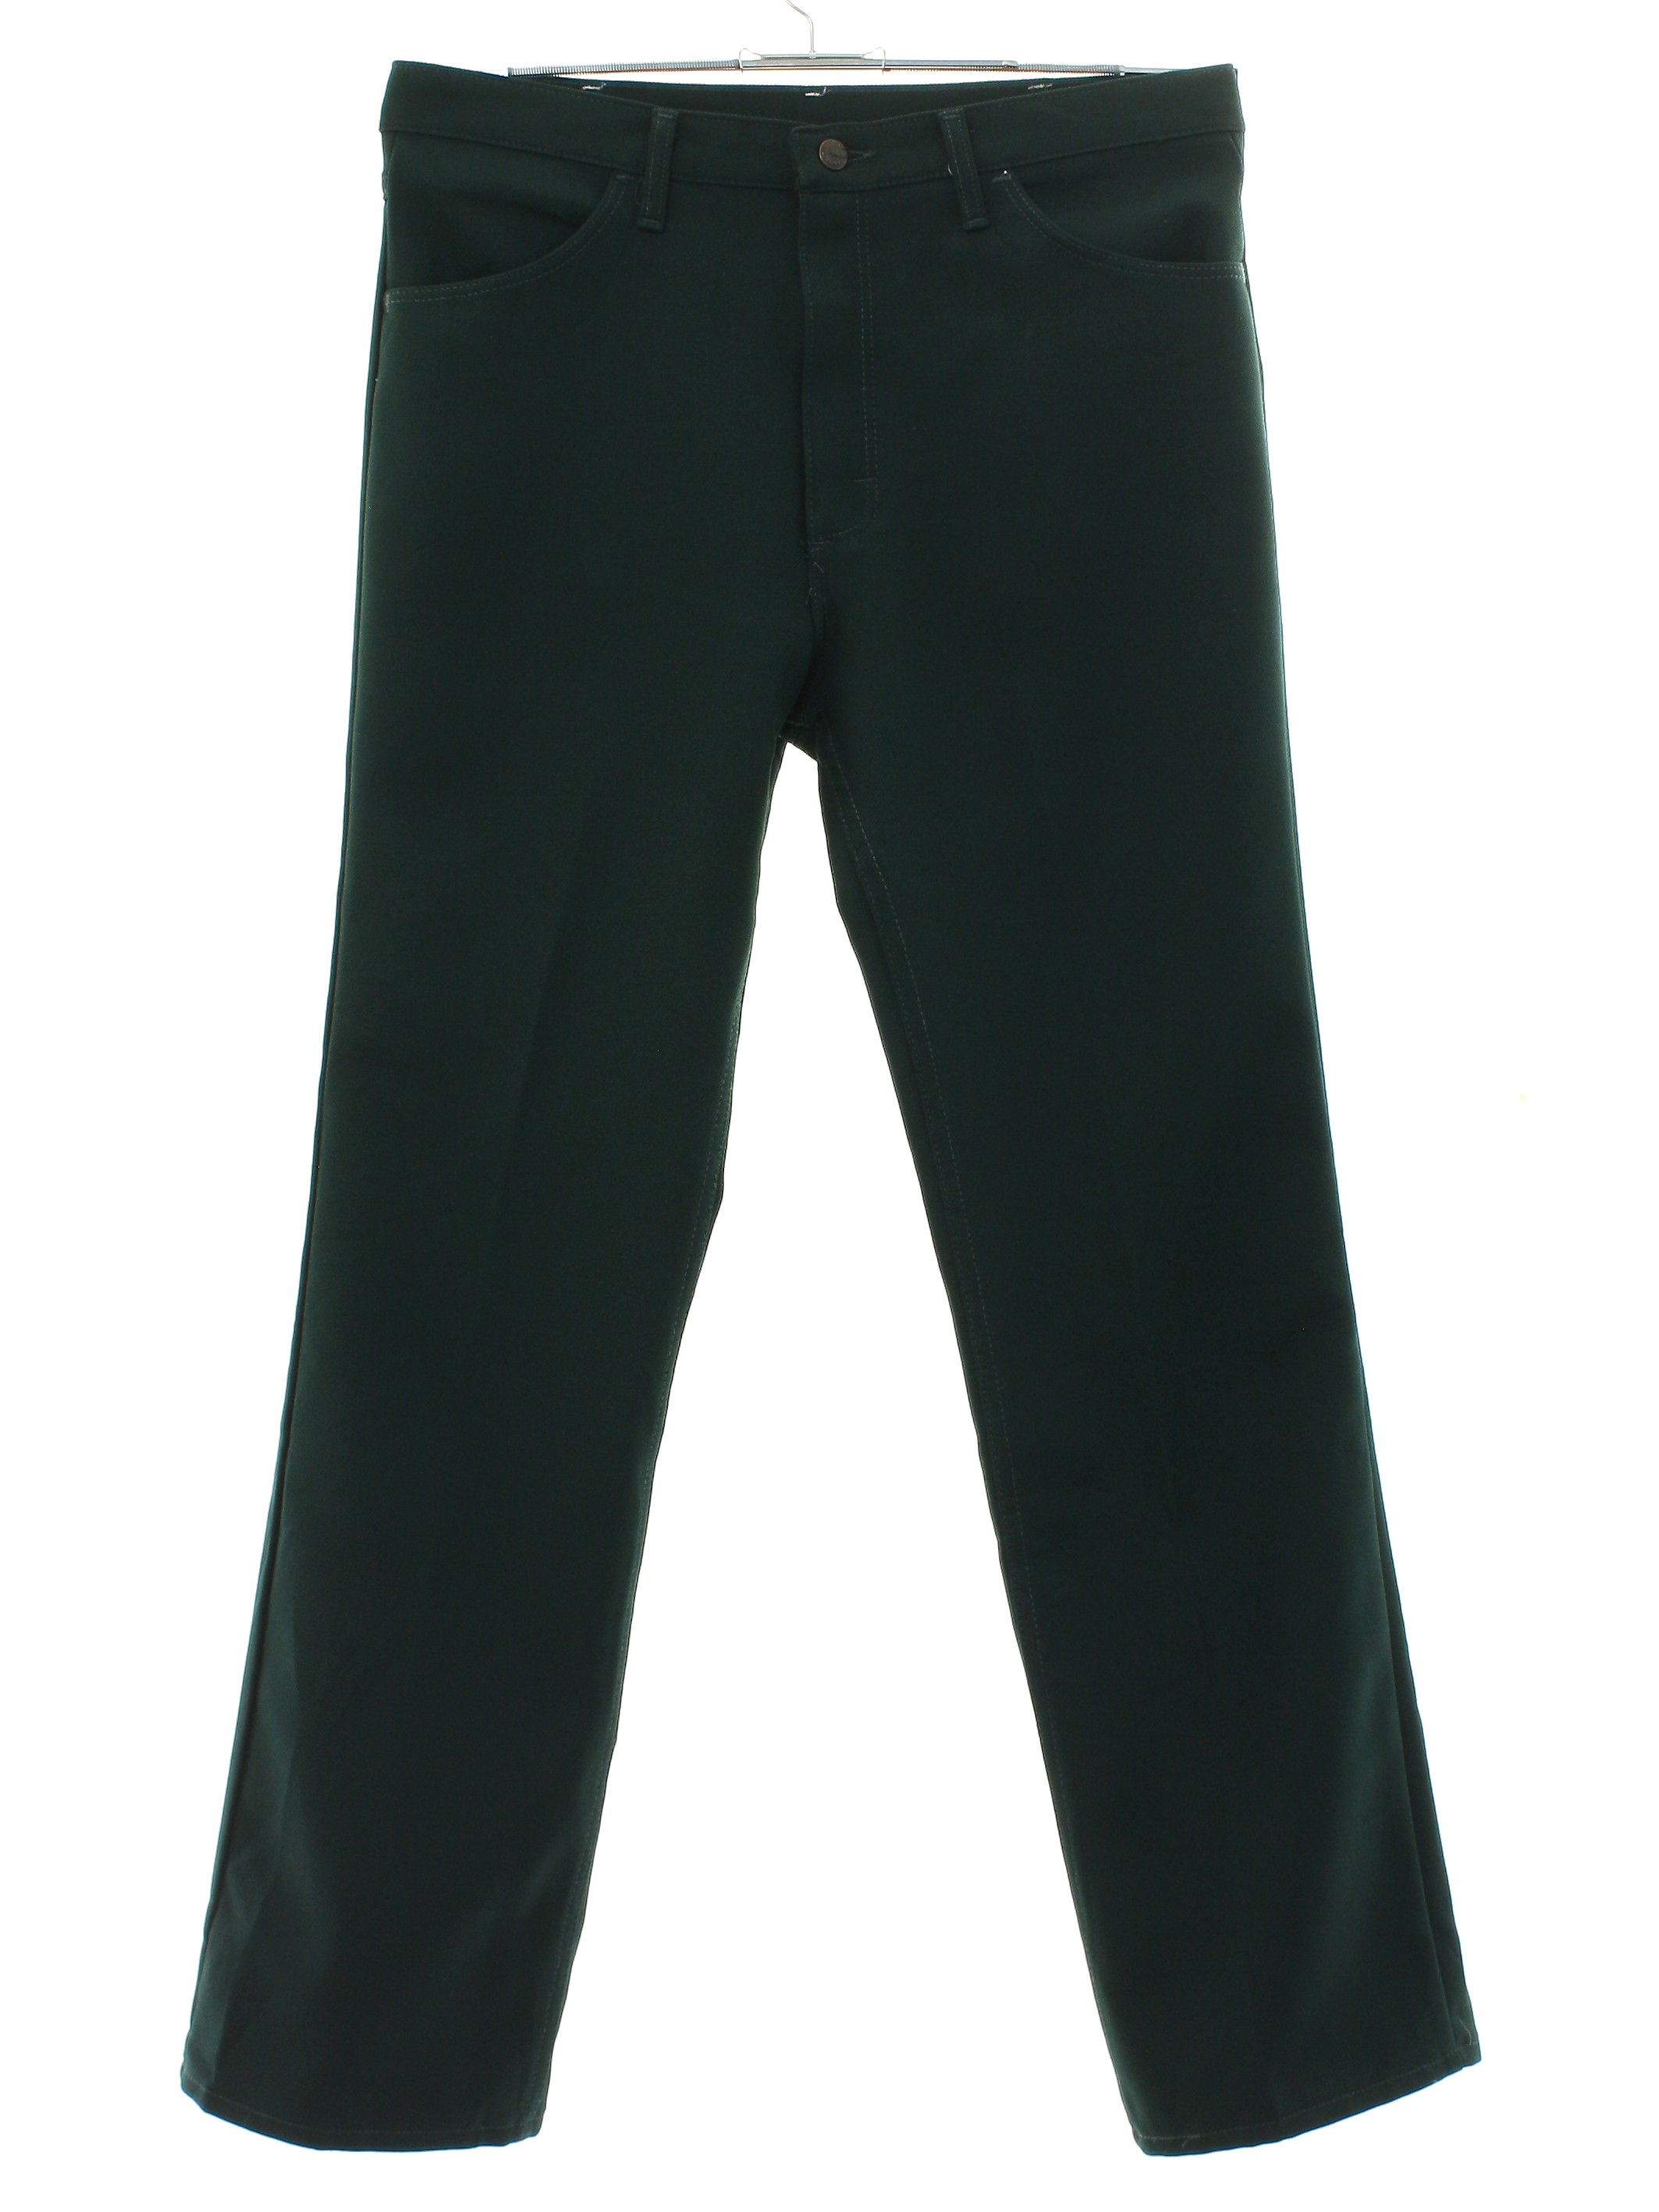 1970s Wrangler Pants: 70s -Wrangler- Mens forest green solid colored ...